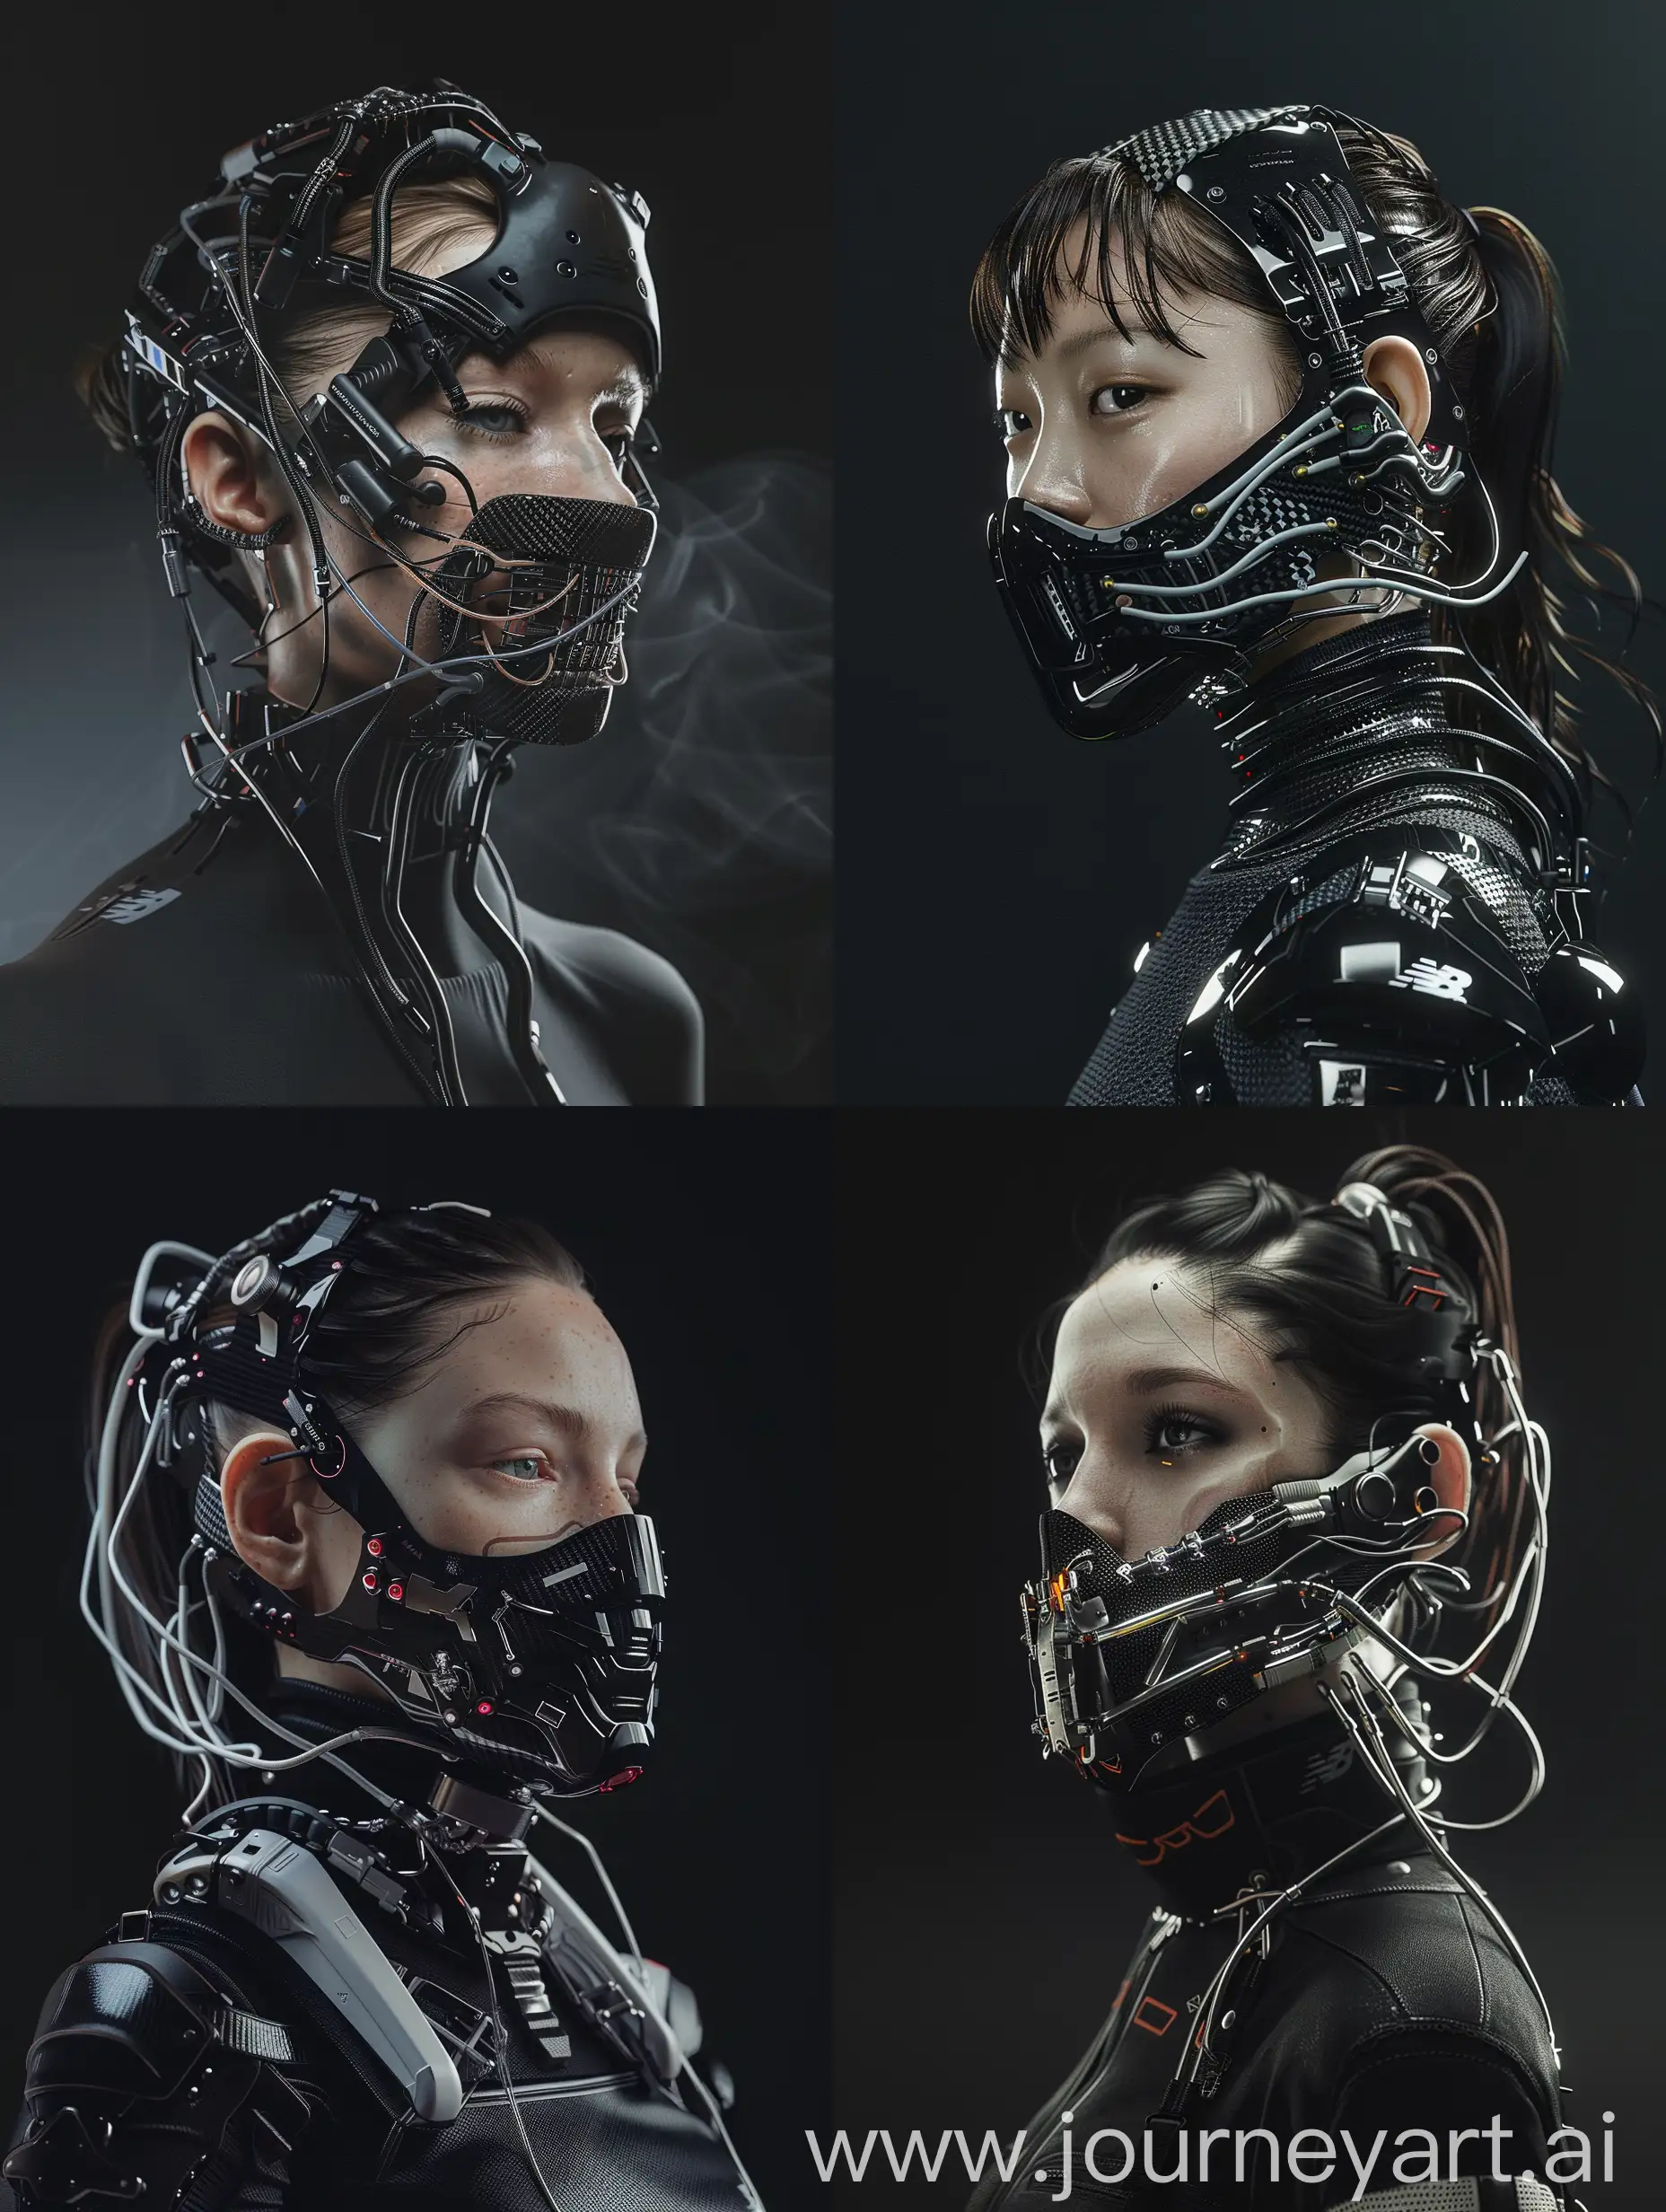 Futuristic-Cyberpunk-Character-with-Advanced-Mask-and-New-Balance-Addons